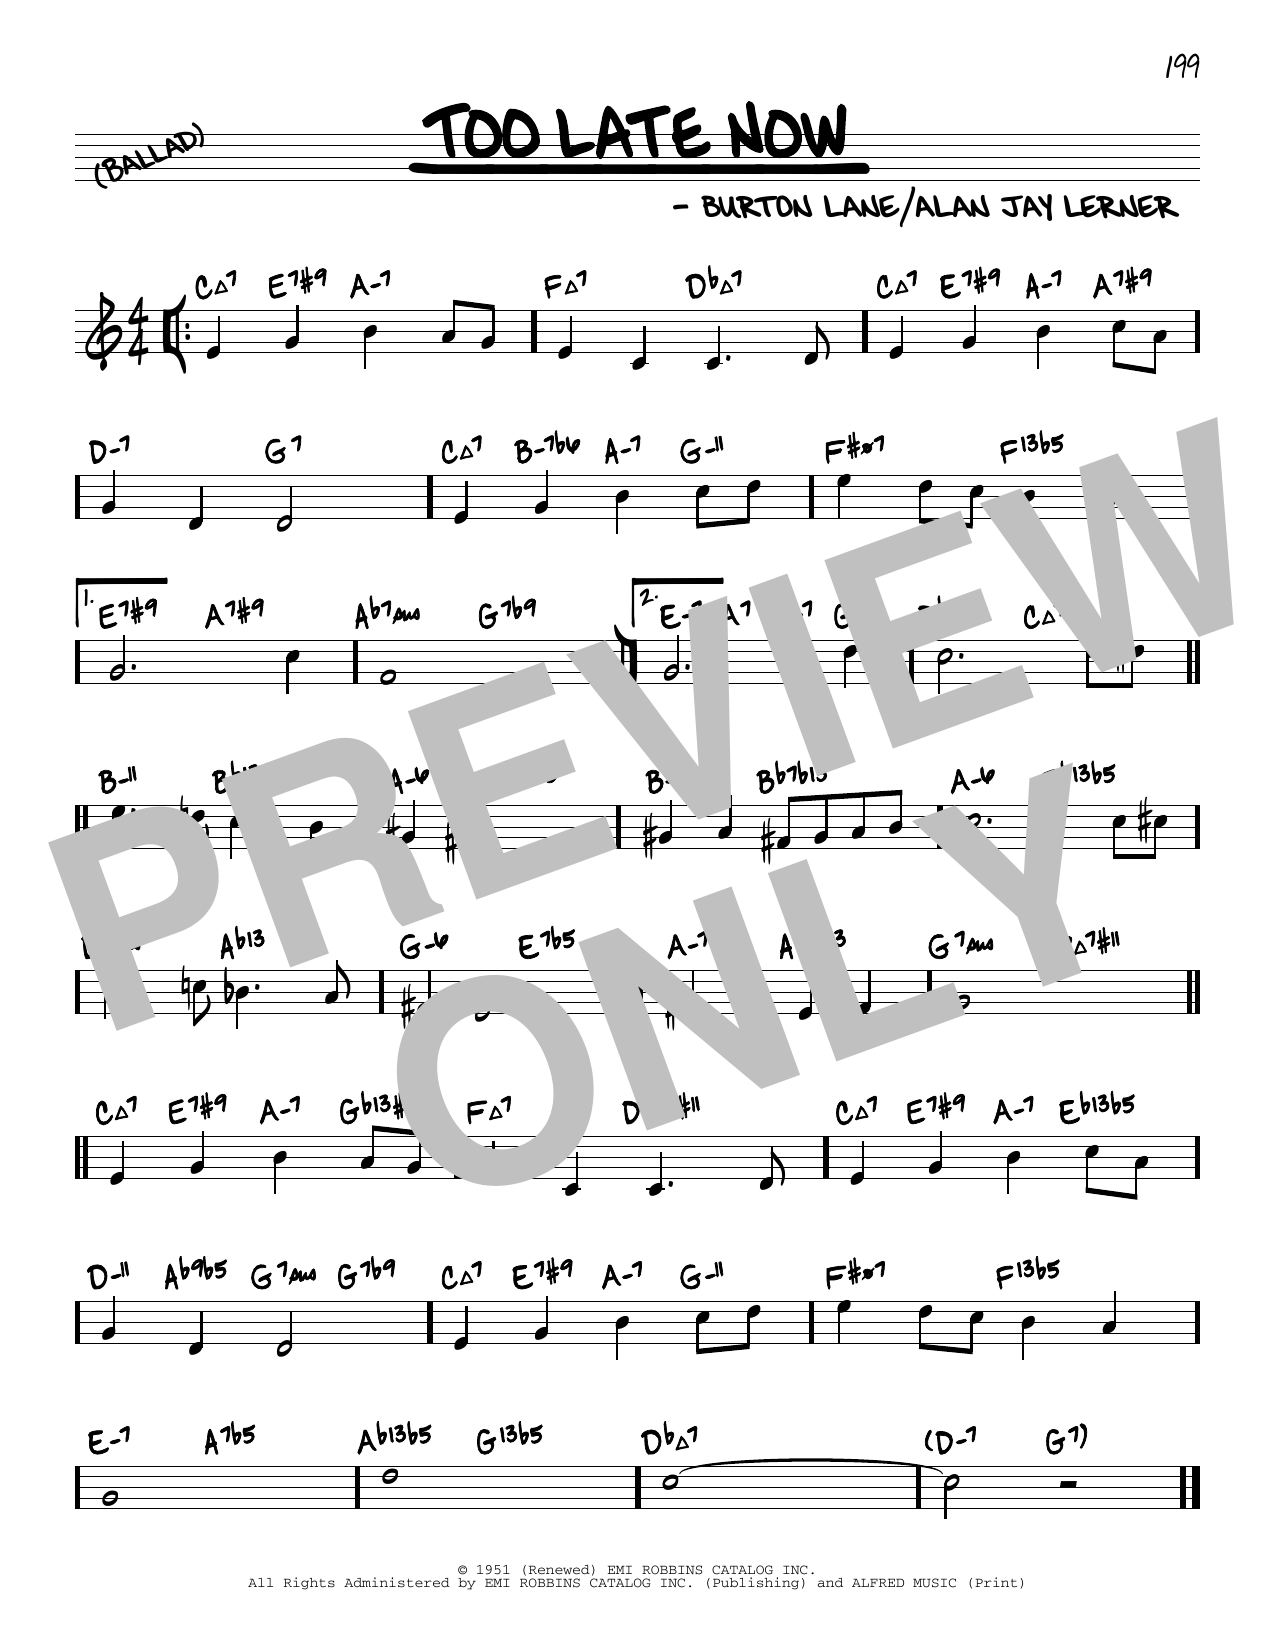 Alan Jay Lerner & Burton Lane Too Late Now (arr. David Hazeltine) Sheet Music Notes & Chords for Real Book – Enhanced Chords - Download or Print PDF